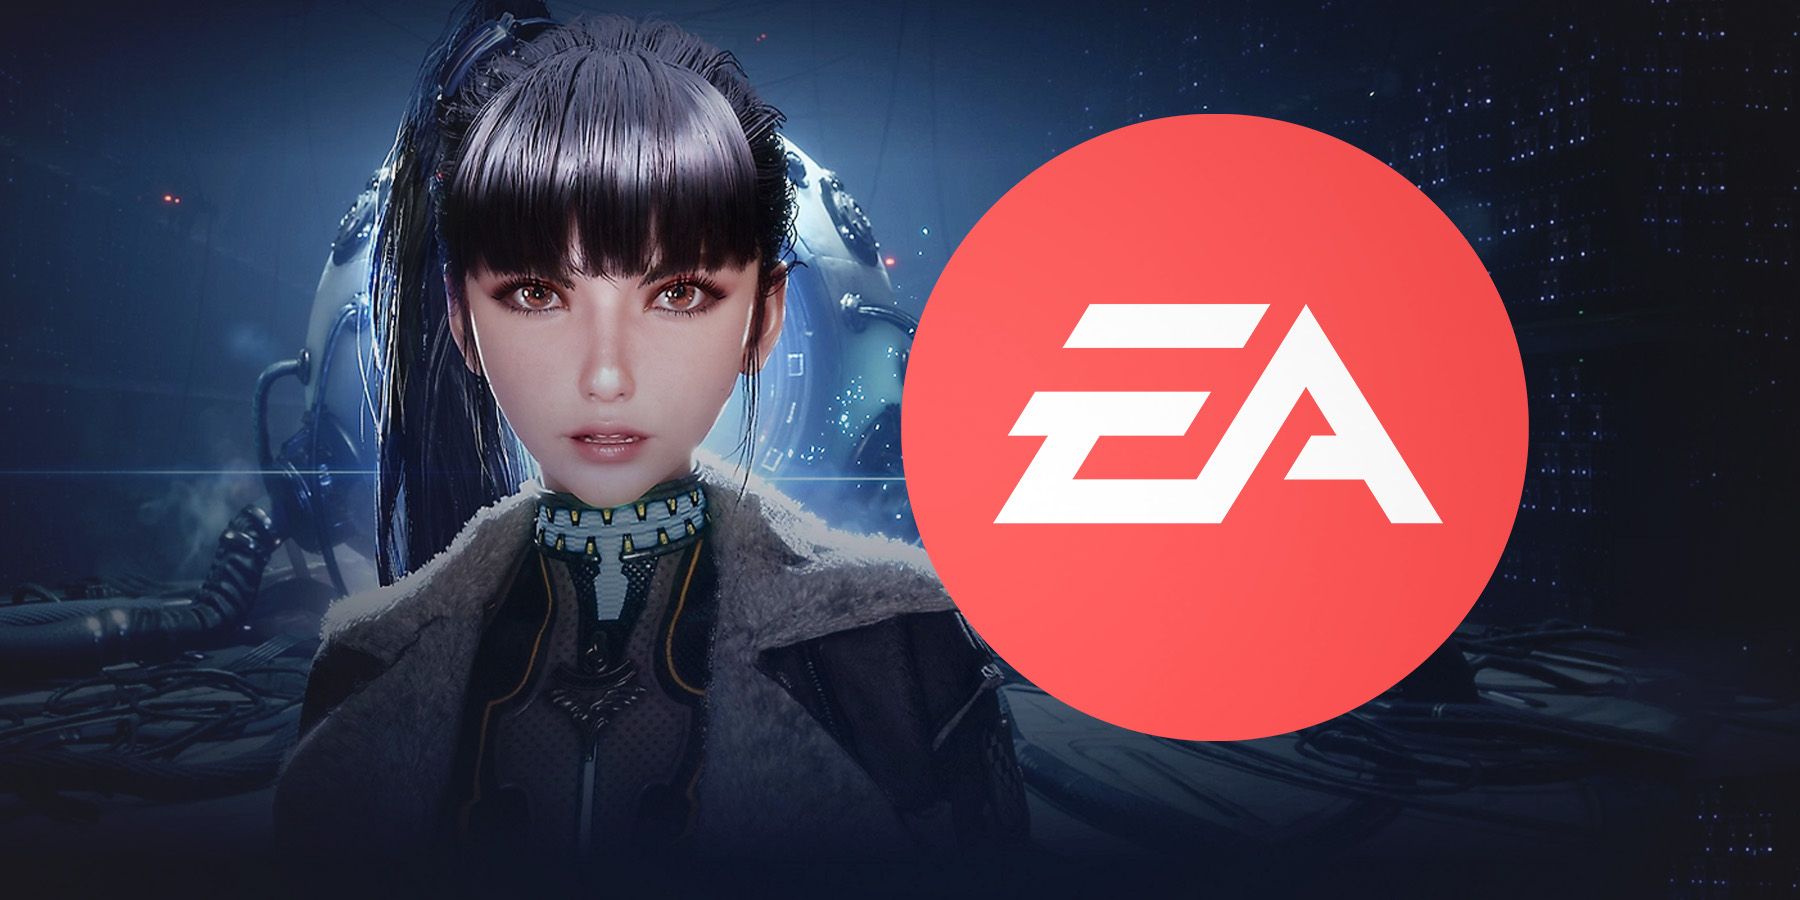 Stellar Blade Eve close-up next to EA logo